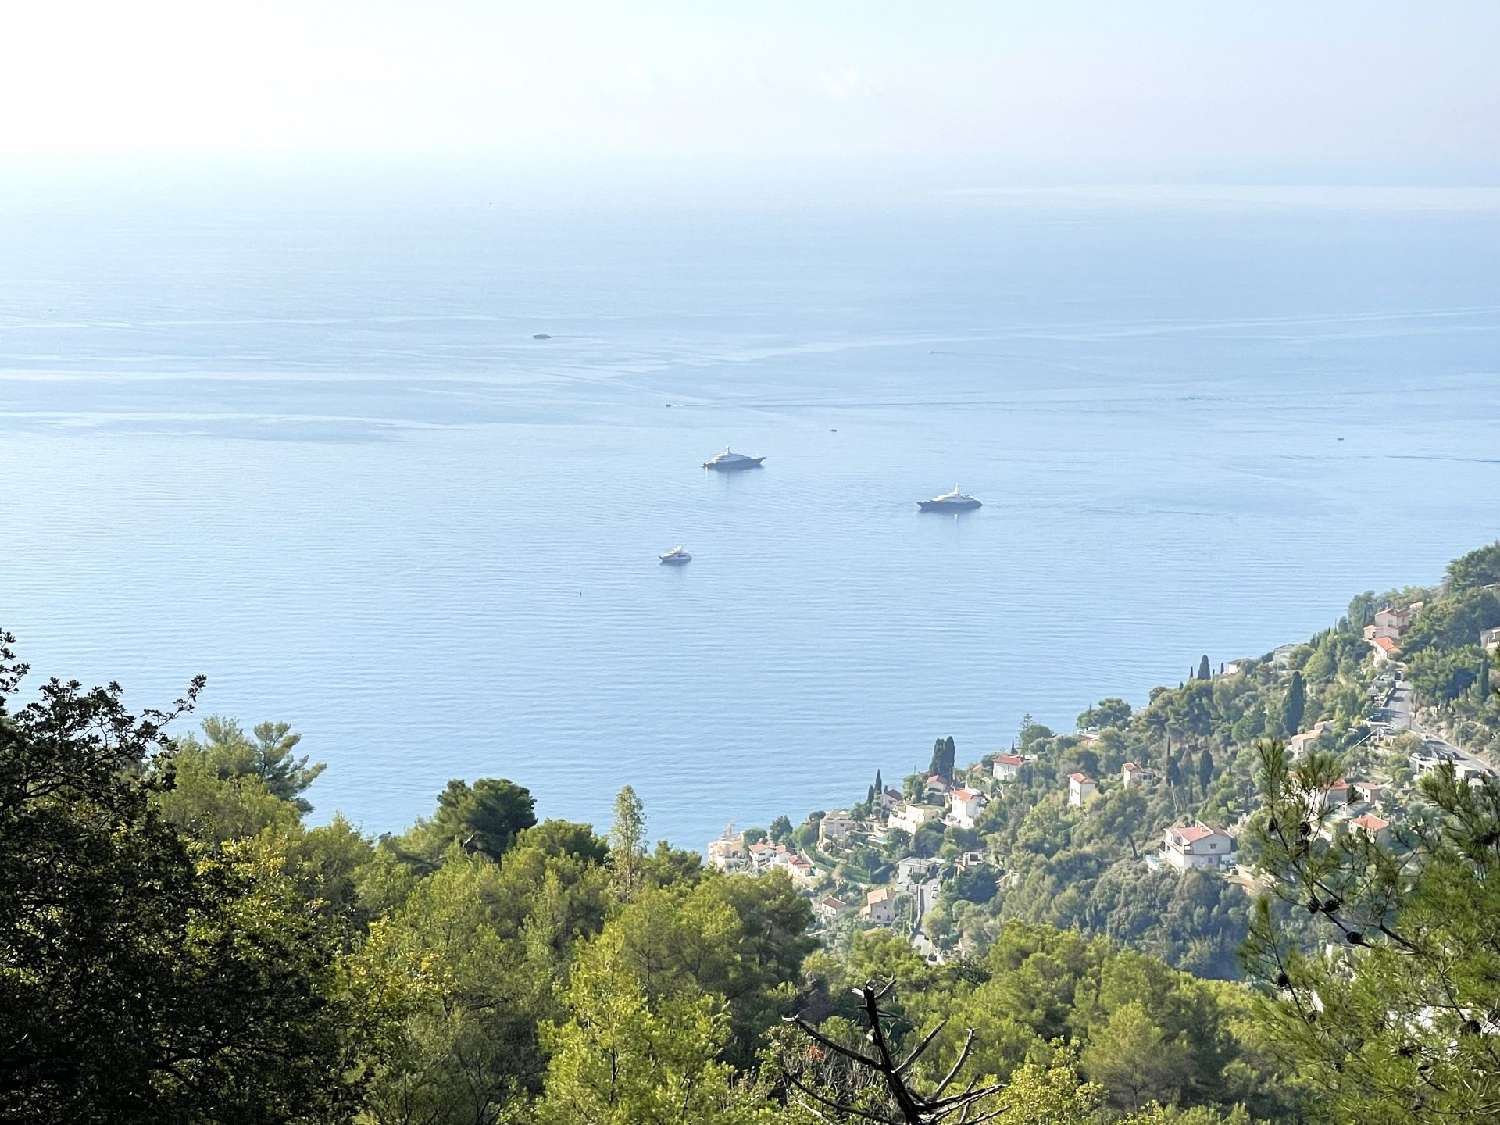  à vendre villa Roquebrune-Cap-Martin Alpes-Maritimes 3